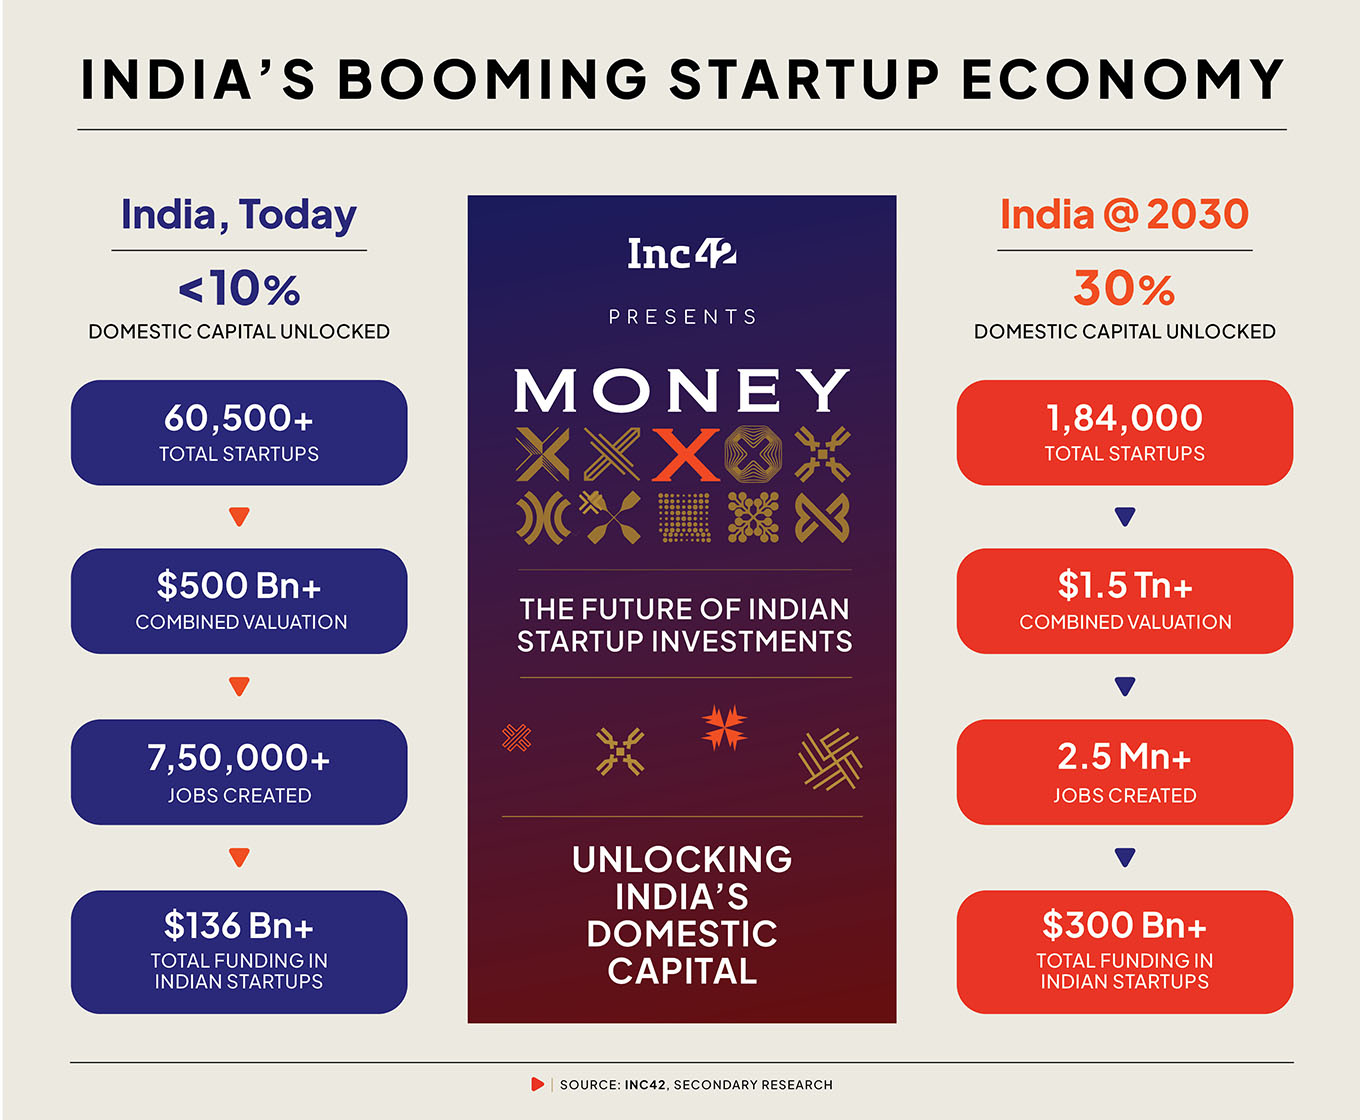 India's Booming Startup Economy